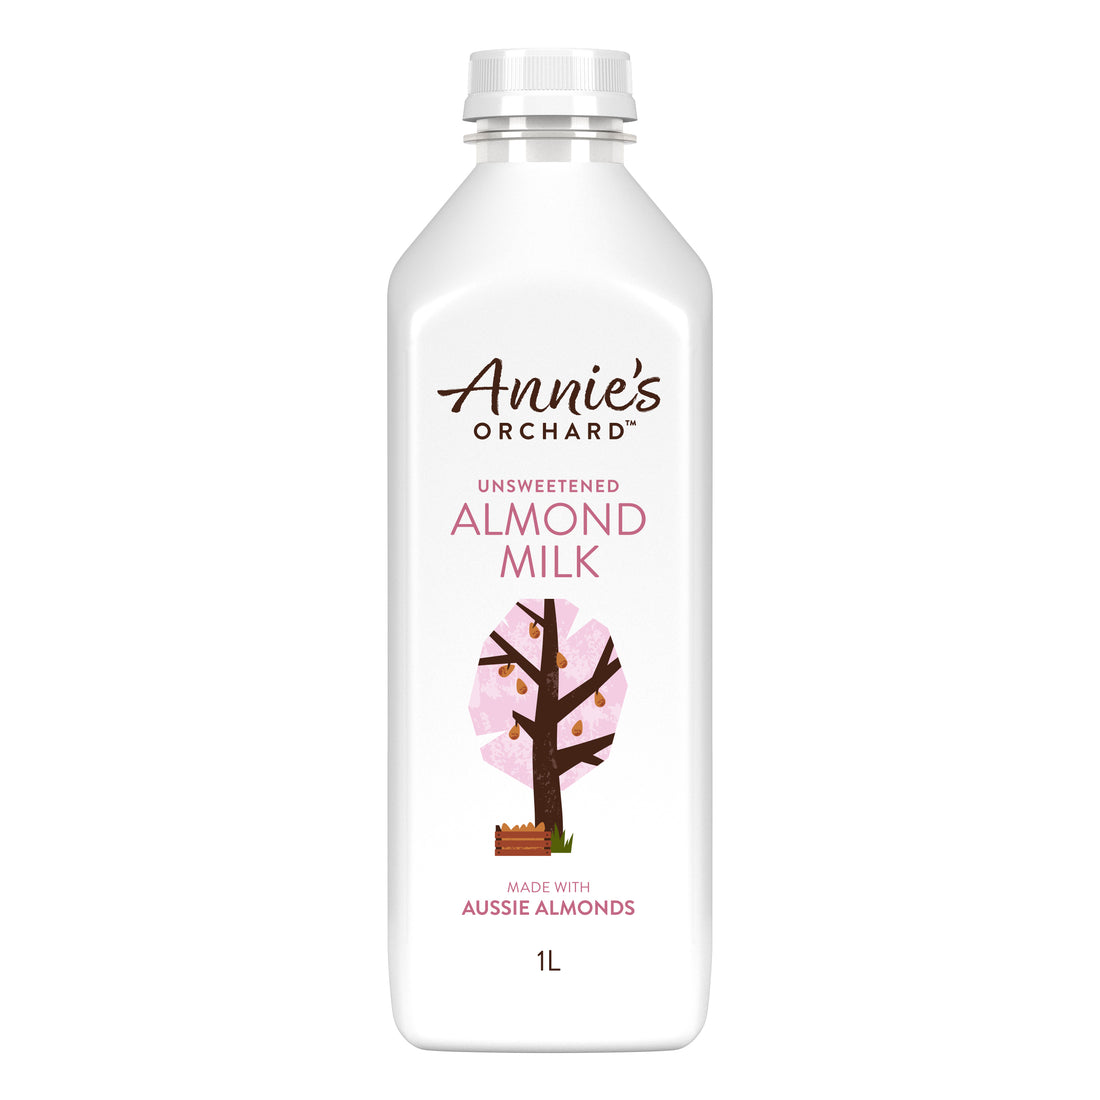 Annie's Orchard Unsweetened Almond Milk 1L